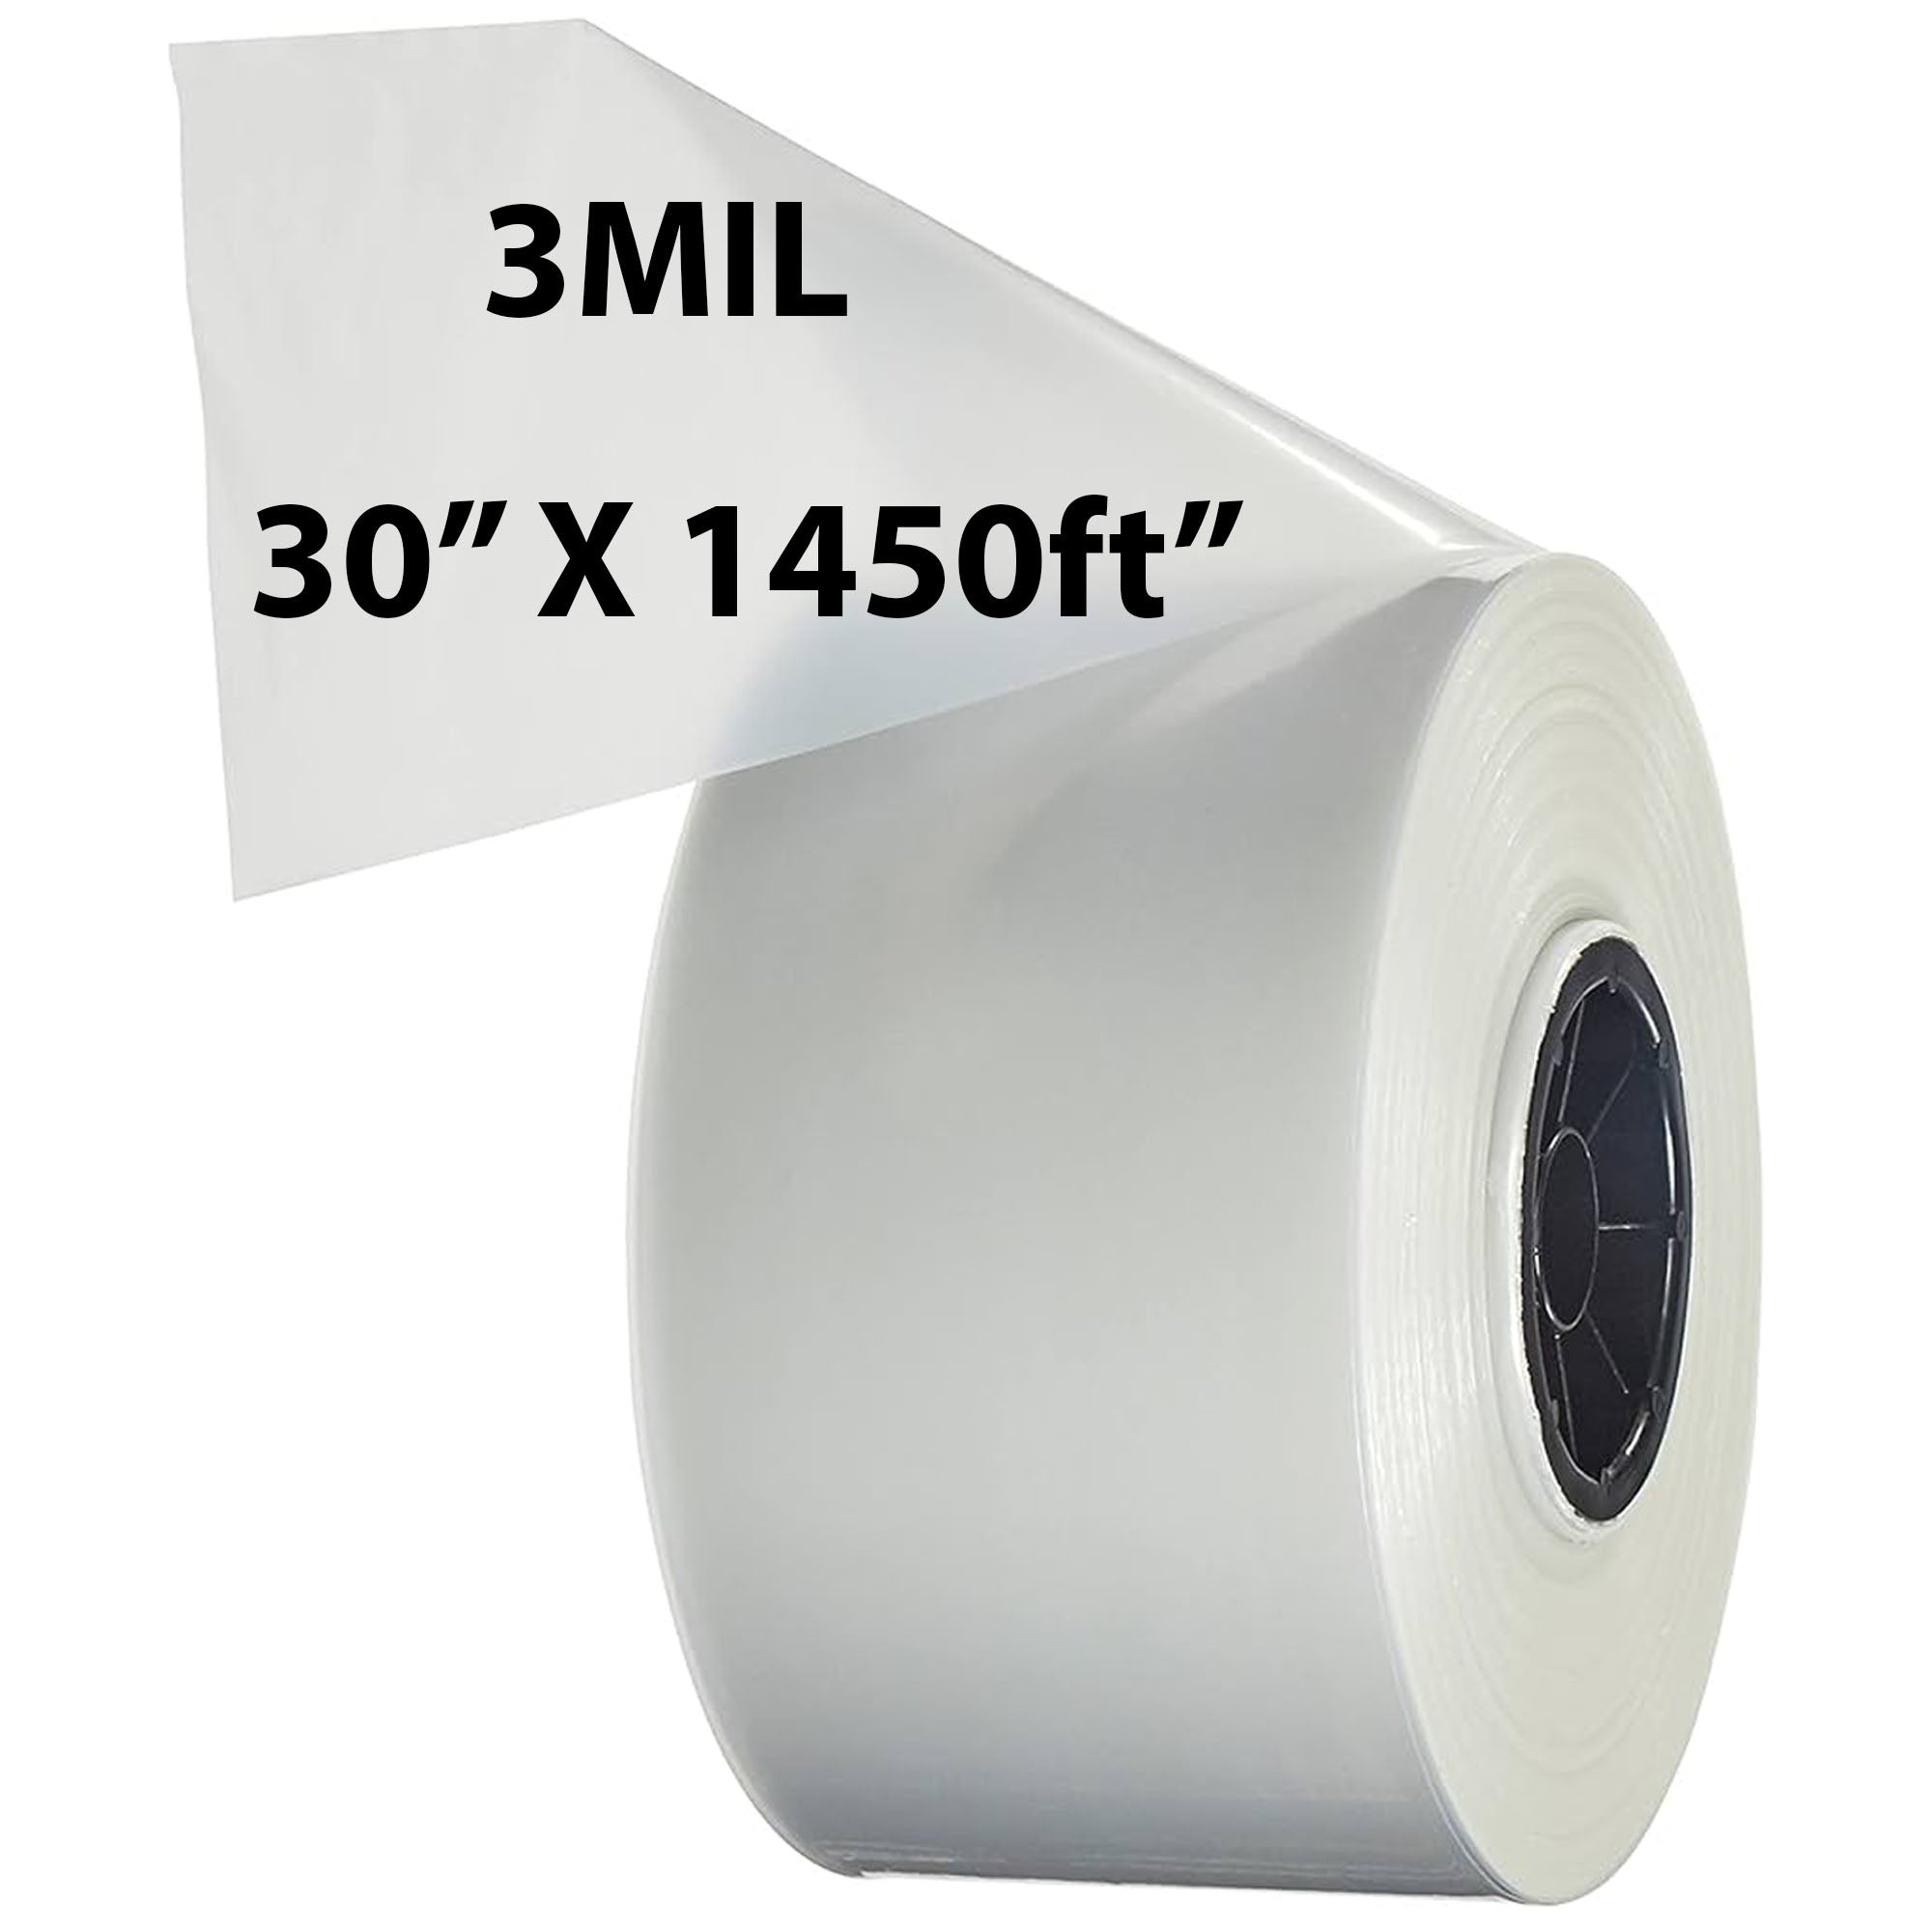 Food Grade Poly Tubing Roll Bags 3Mil 30x1450ft- Impulse Heat Sealer